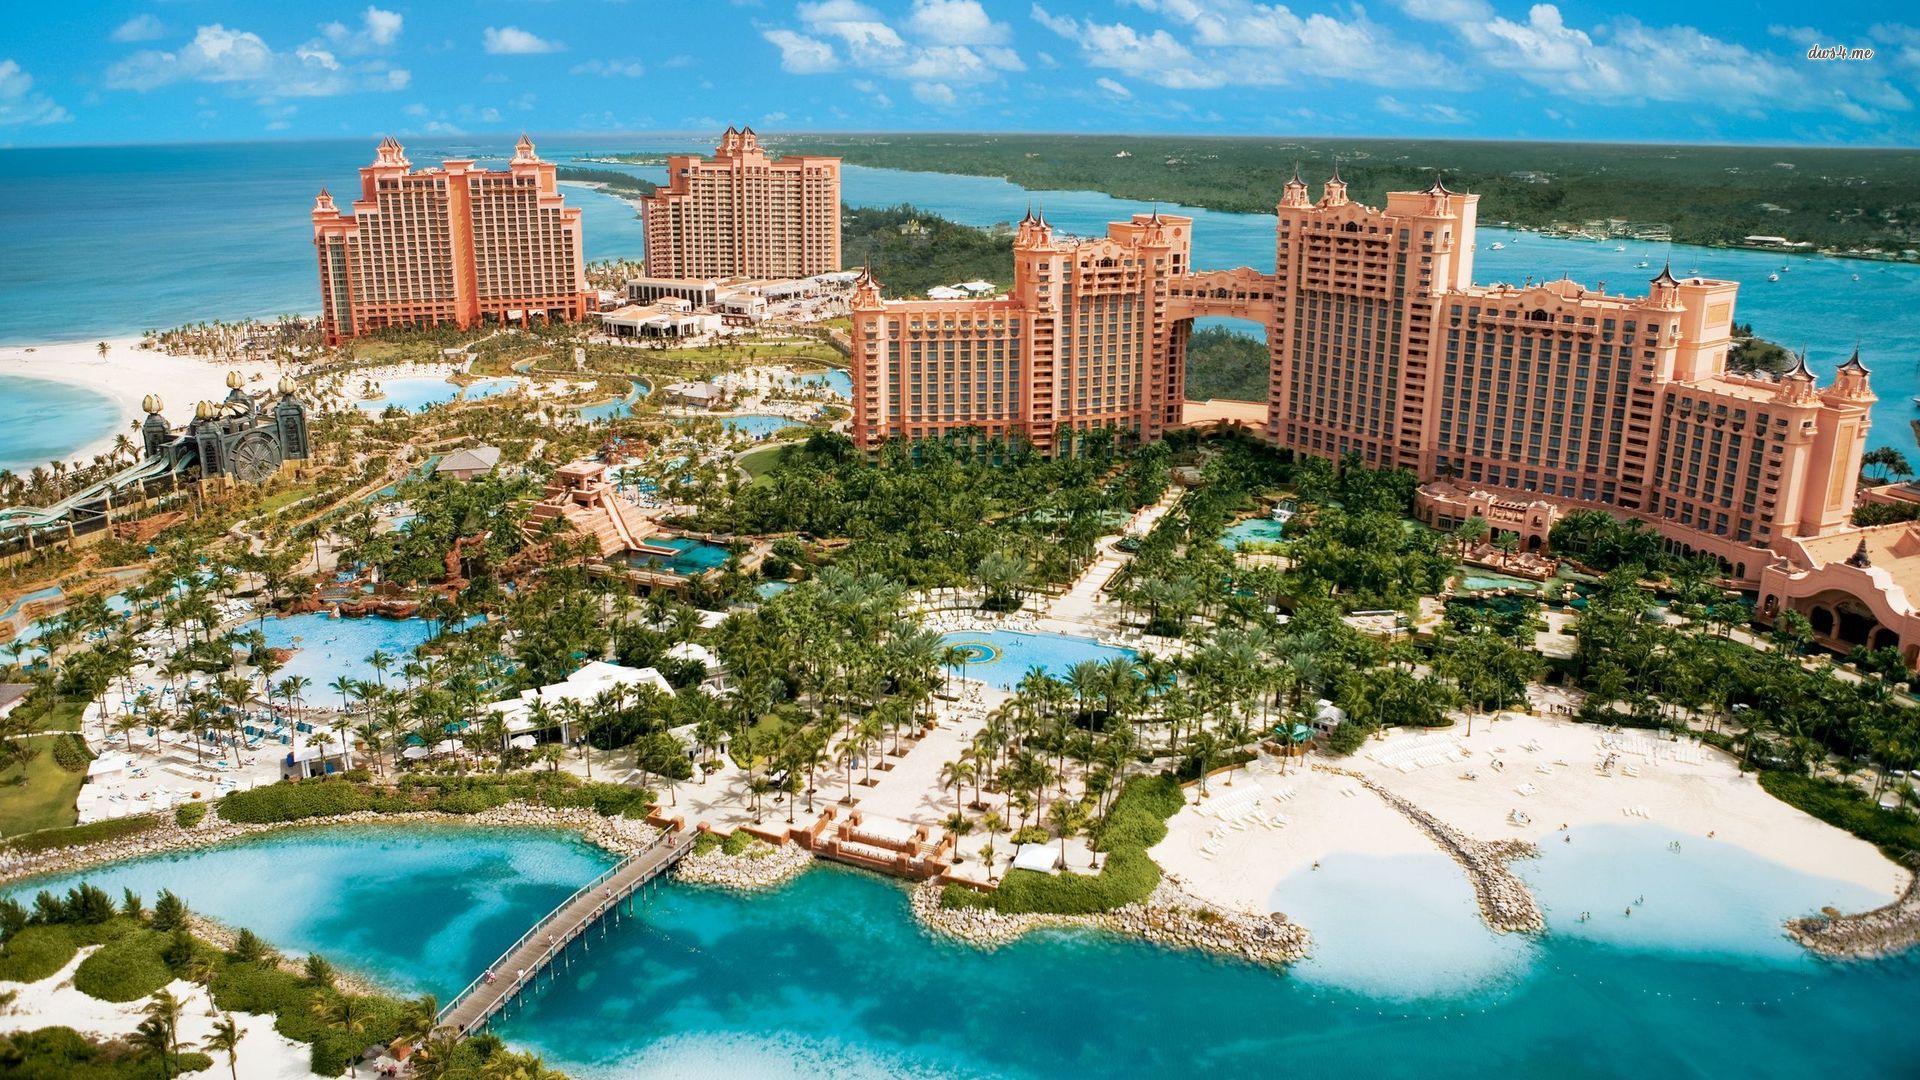 Kerzner S Atlantis Paradise Island To Bee Part Of Marriott